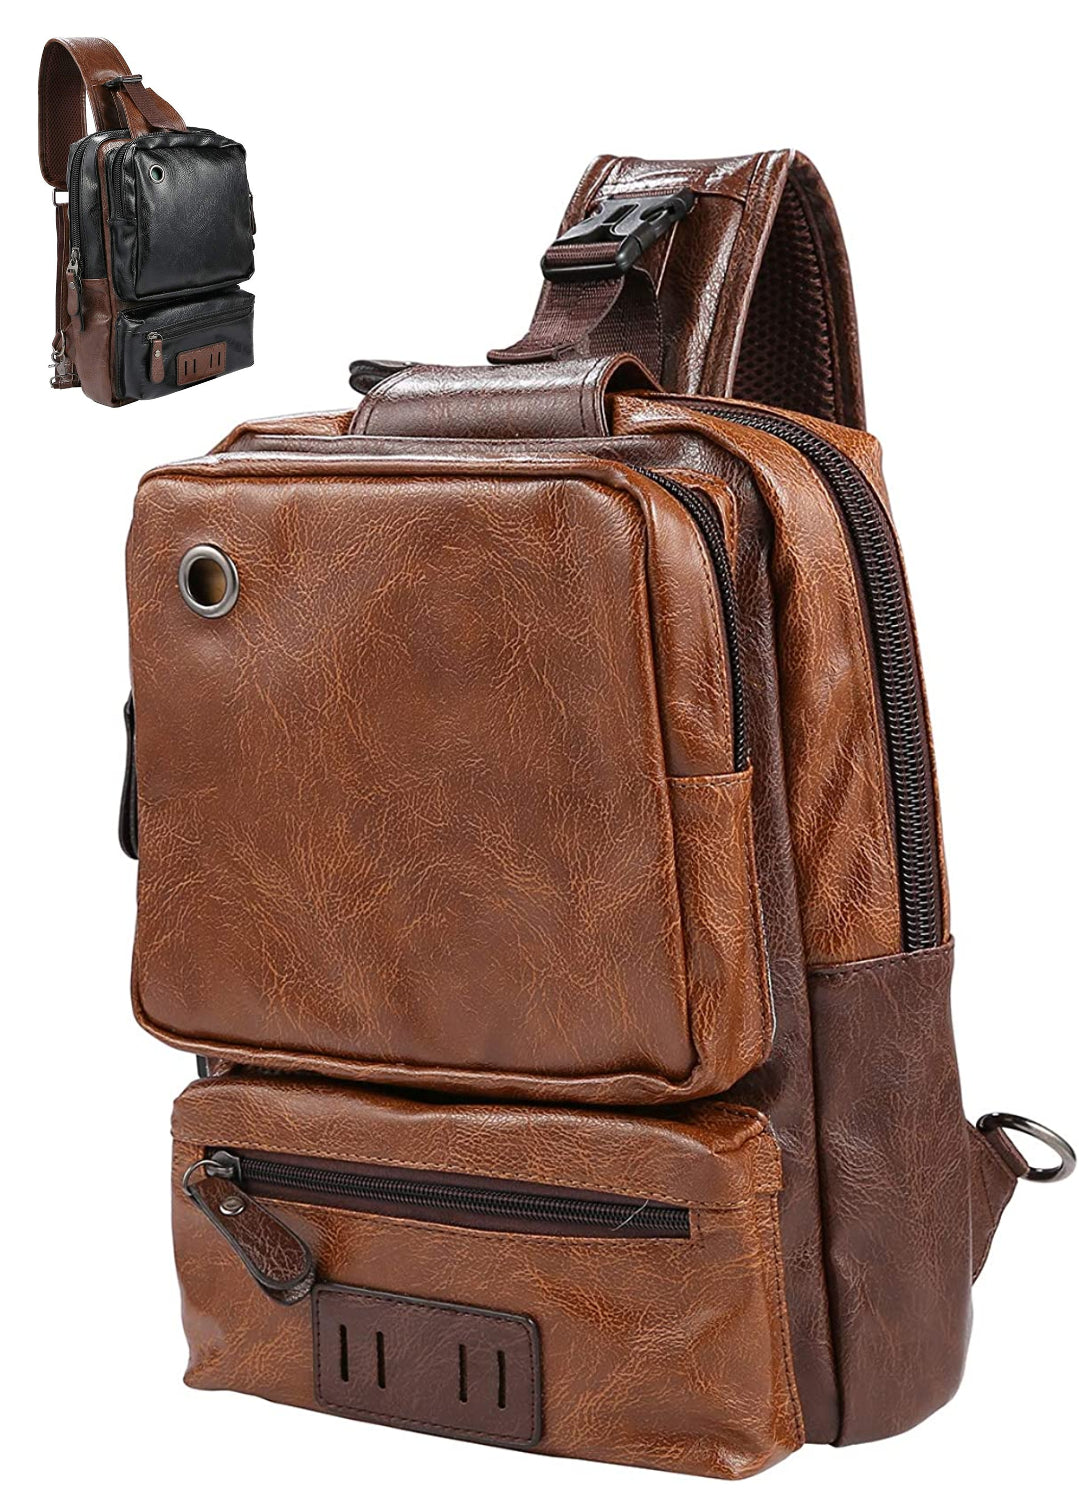 QCXPRO™ Men's Crossbody Sling Chest Bag - Faux Leather, iPad Tablet, USB Shoulder Bag sling chest bag QCXPRO™ Brown 